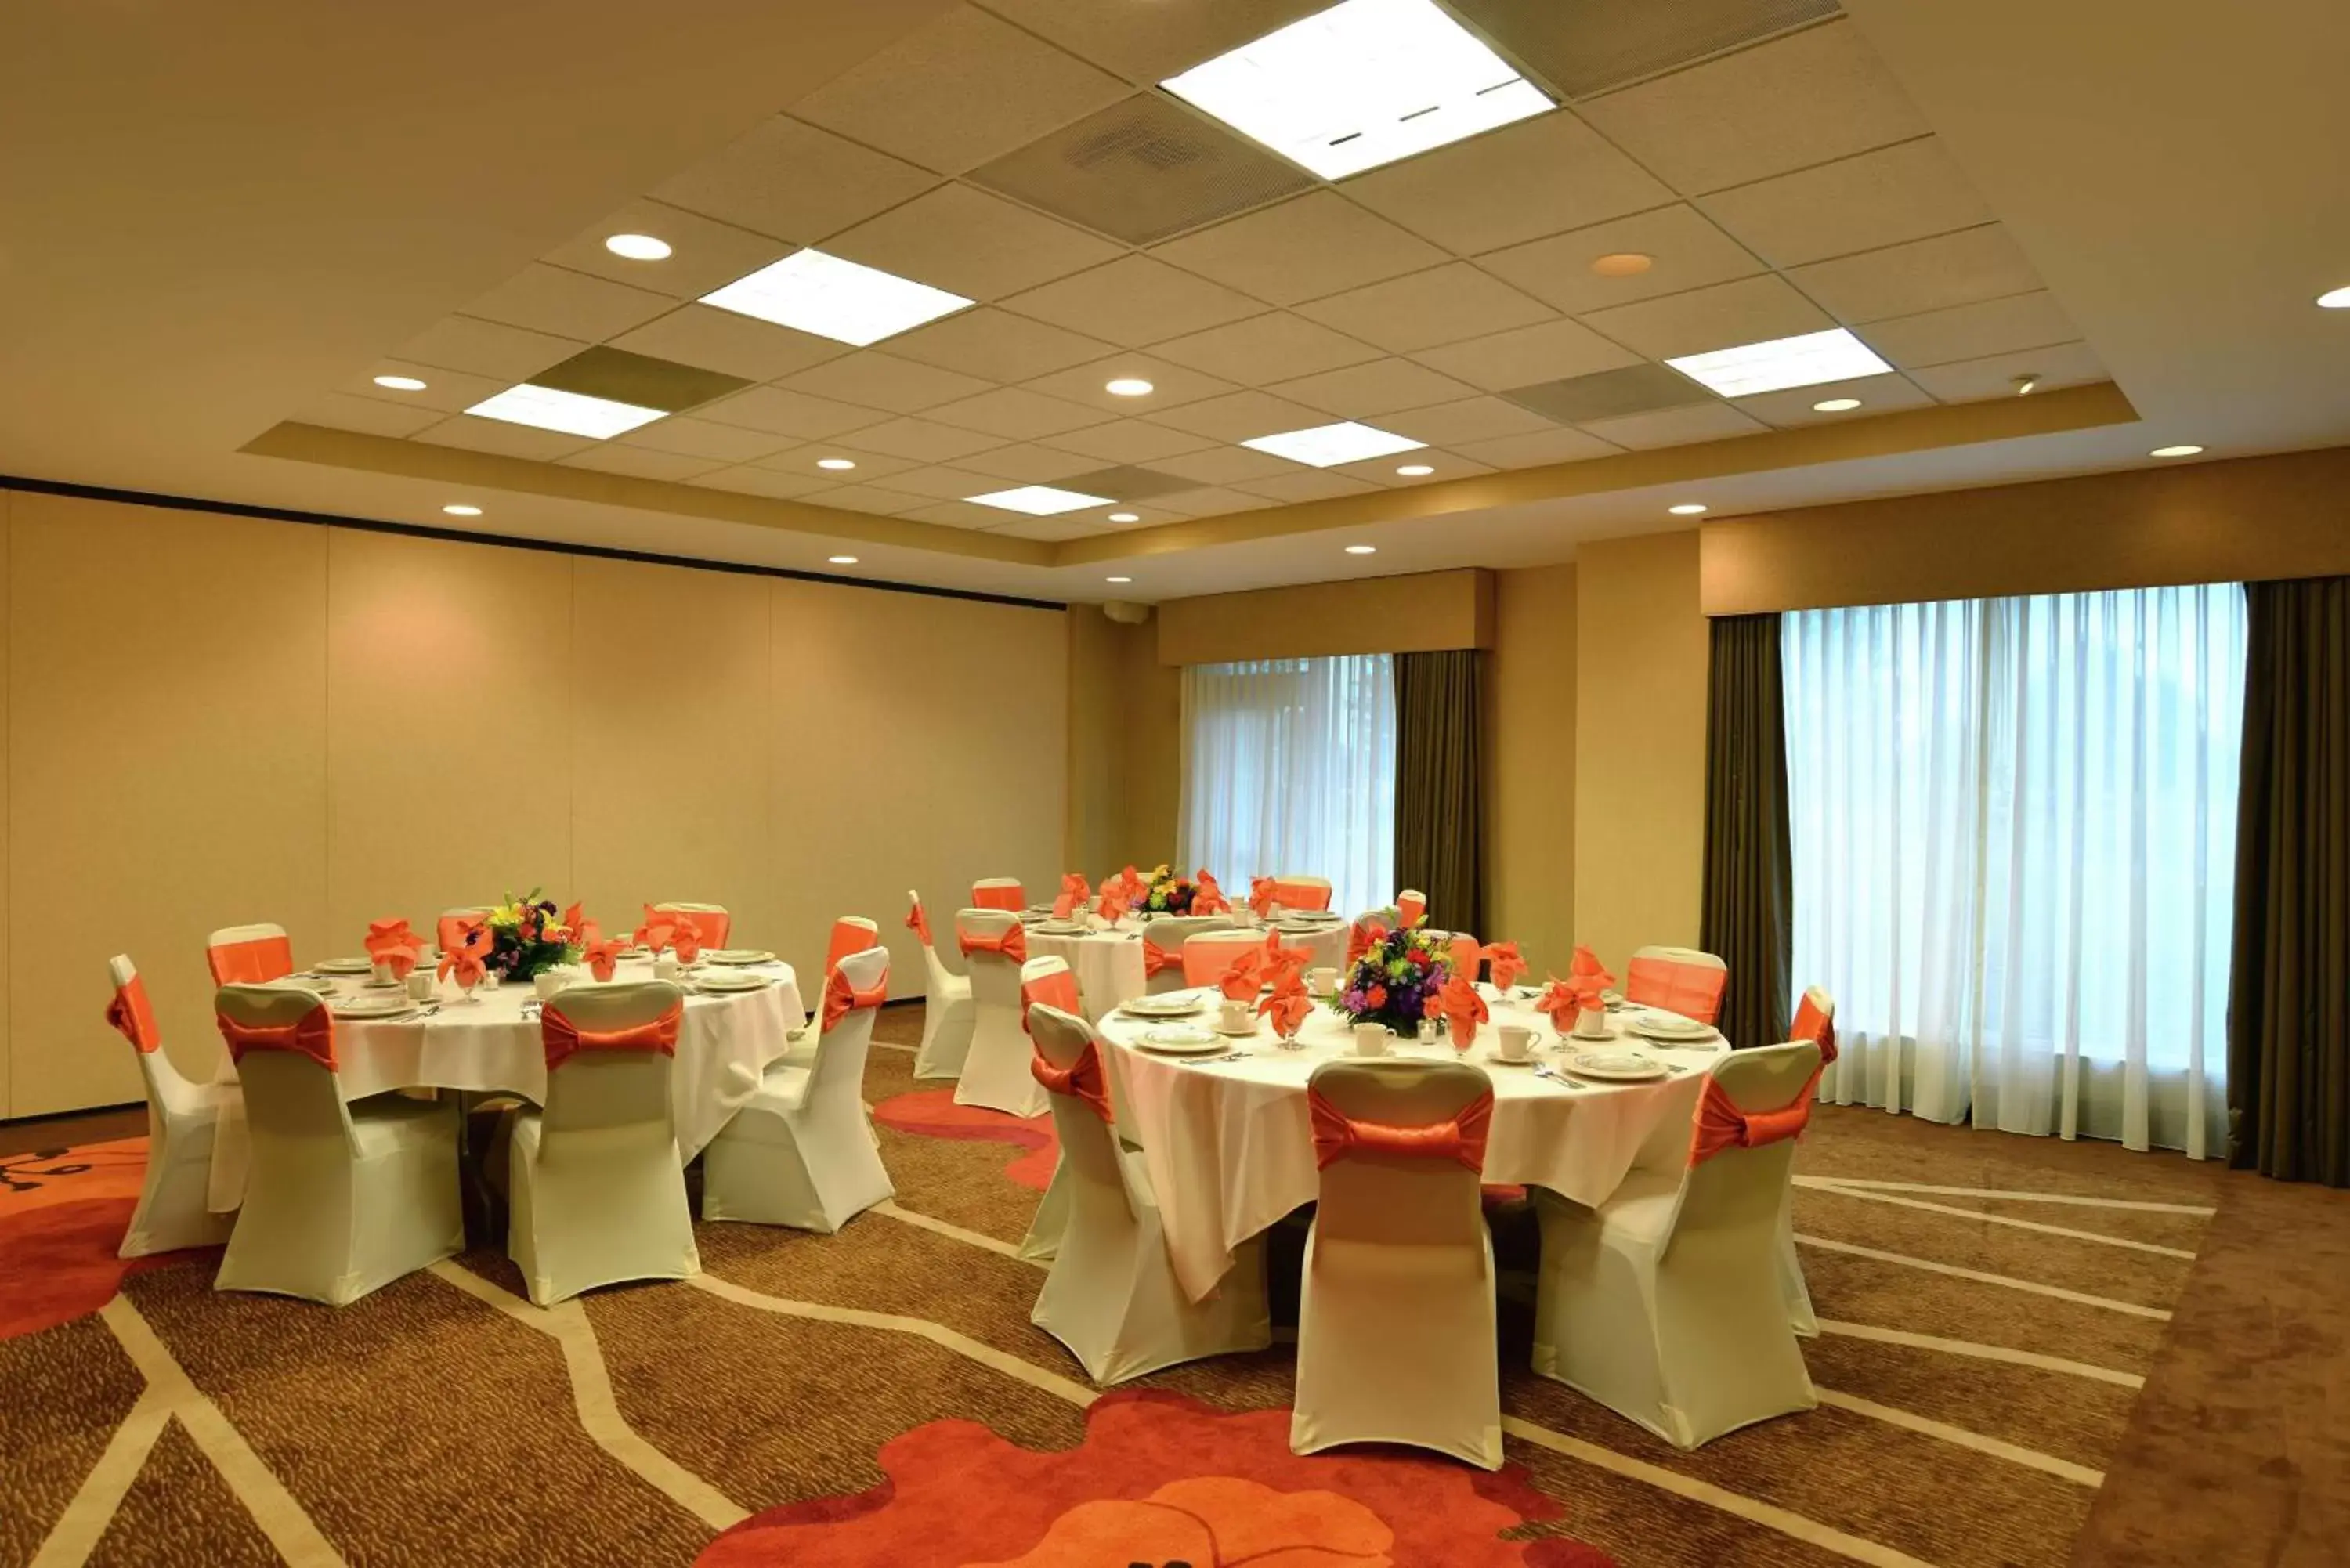 Meeting/conference room, Banquet Facilities in Hilton Garden Inn Kankakee